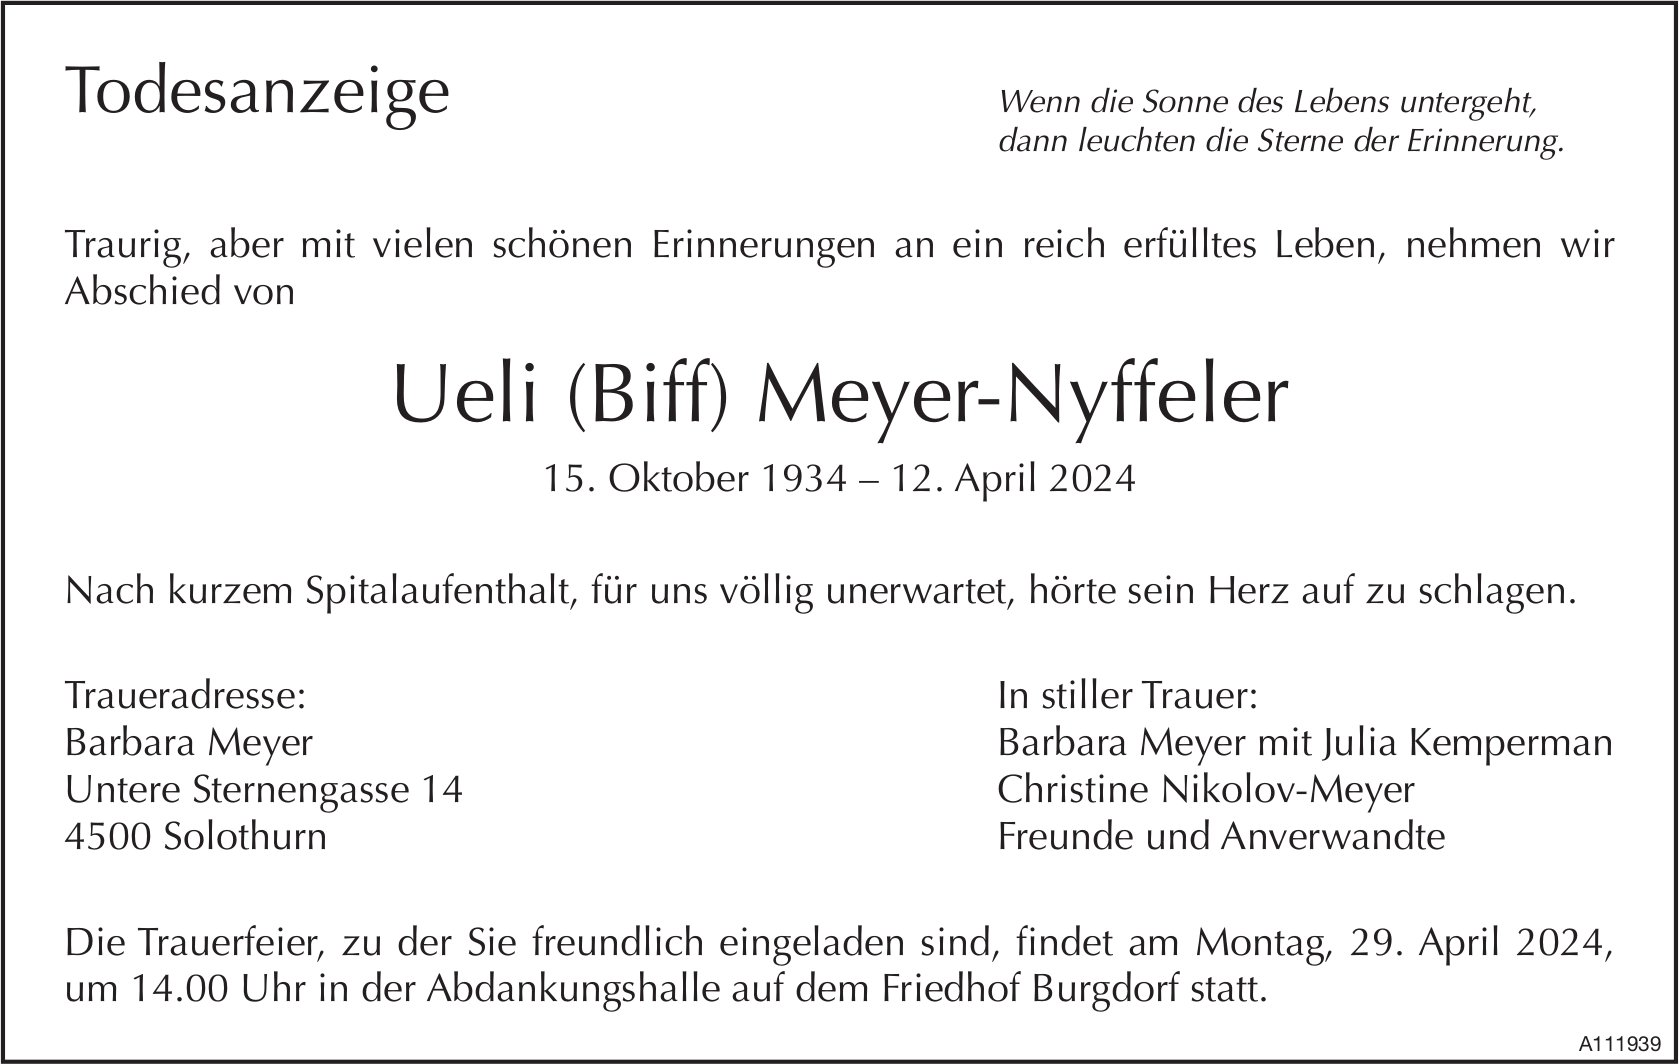 Ueli (Biff) Meyer-Nyffeler, April 2024 / TA